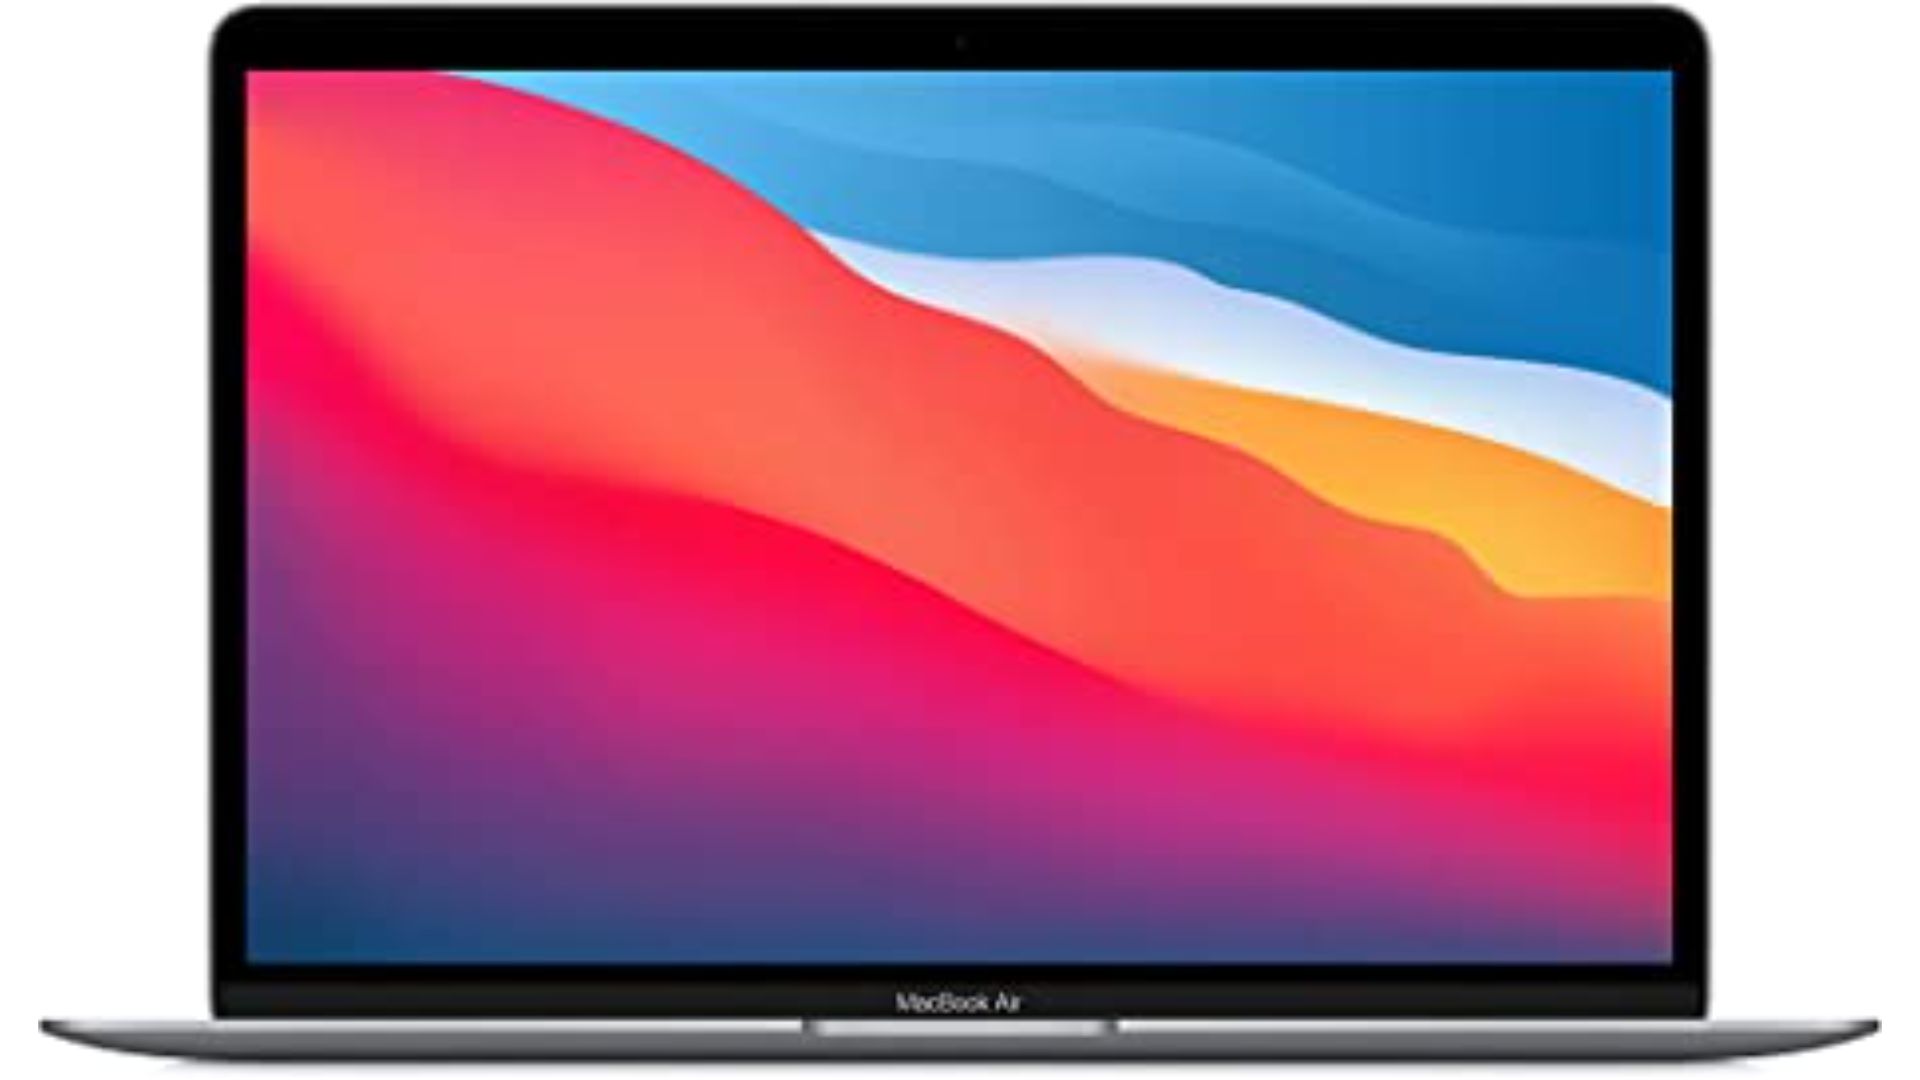 MacBook Air (M1, 2020) - Best Beginner & Budget Friednly Mac Laptop For Photo & Video Editing work 